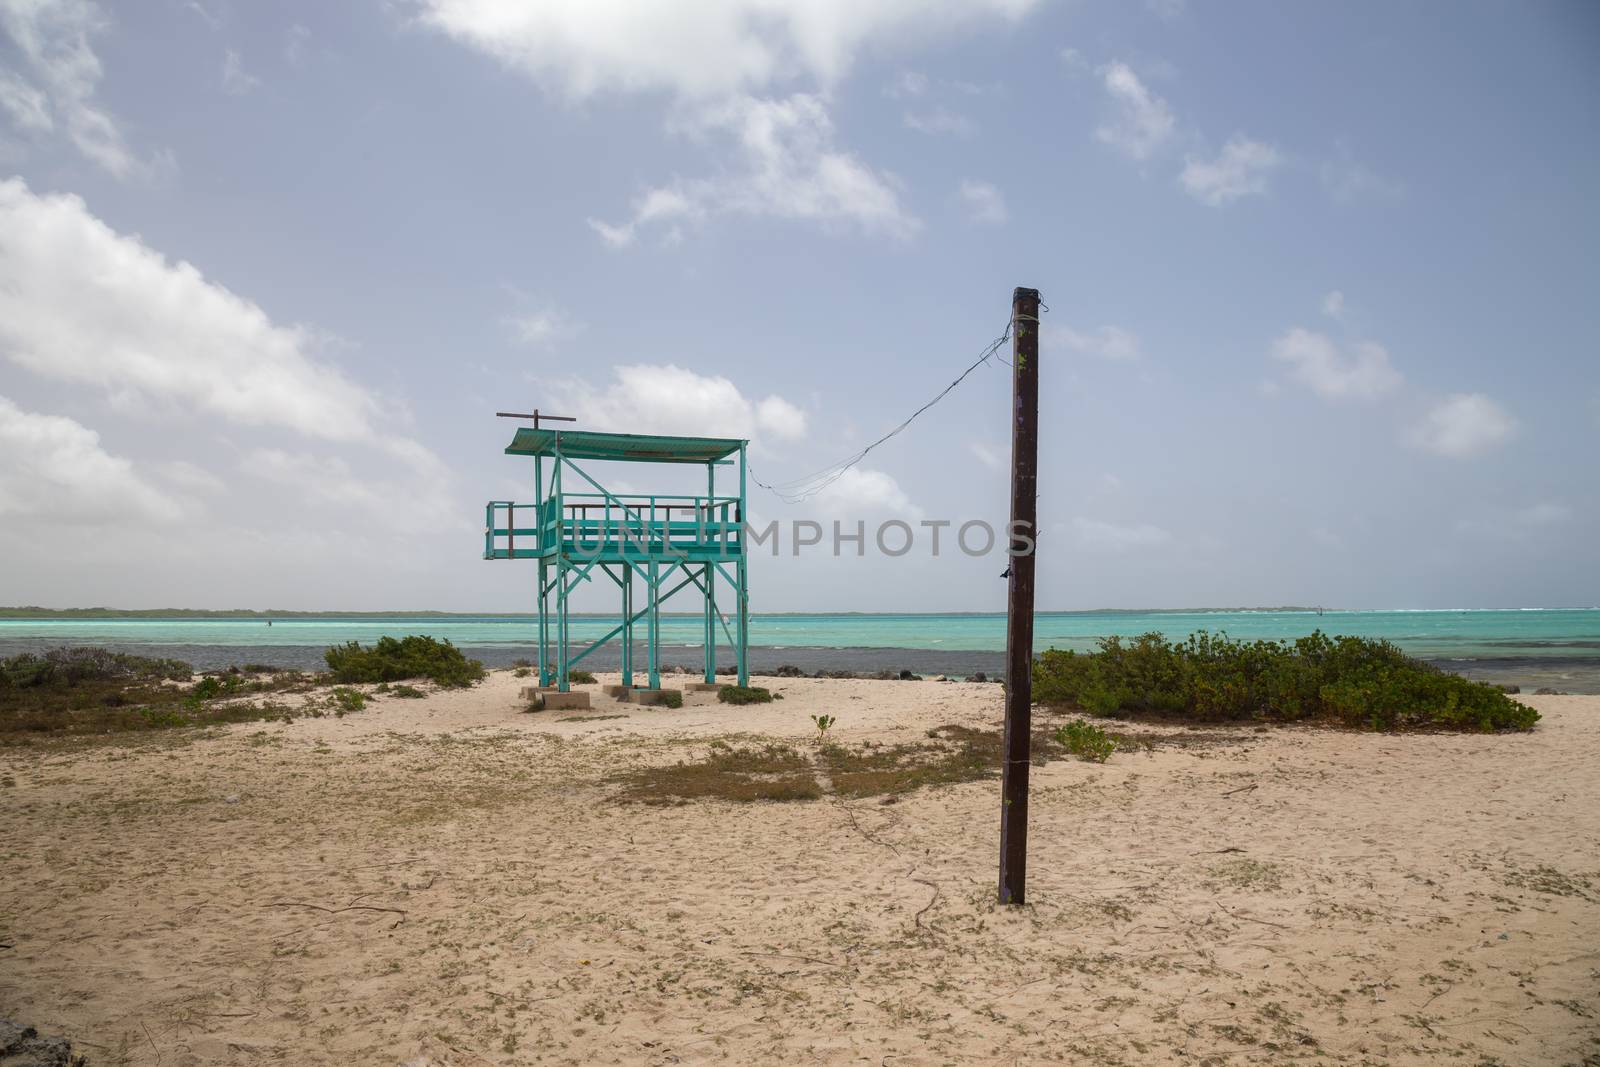 sea beach coast tropical Bonaire island Caribbean sea by desant7474